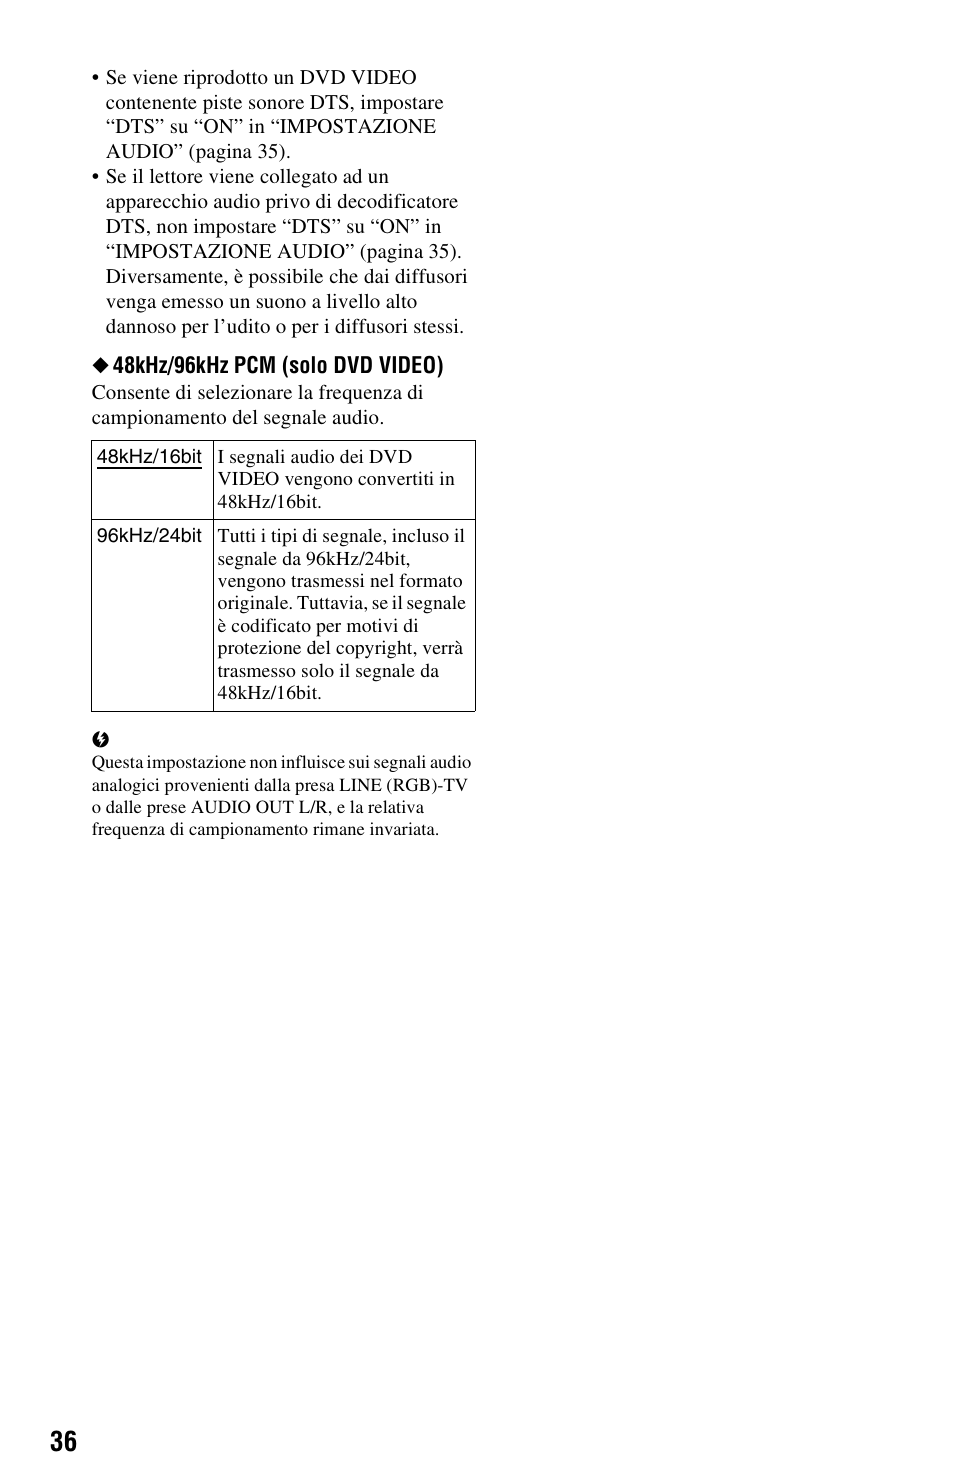 A 36 | Sony DVP-SR100 Manuale d'uso | Pagina 36 / 48